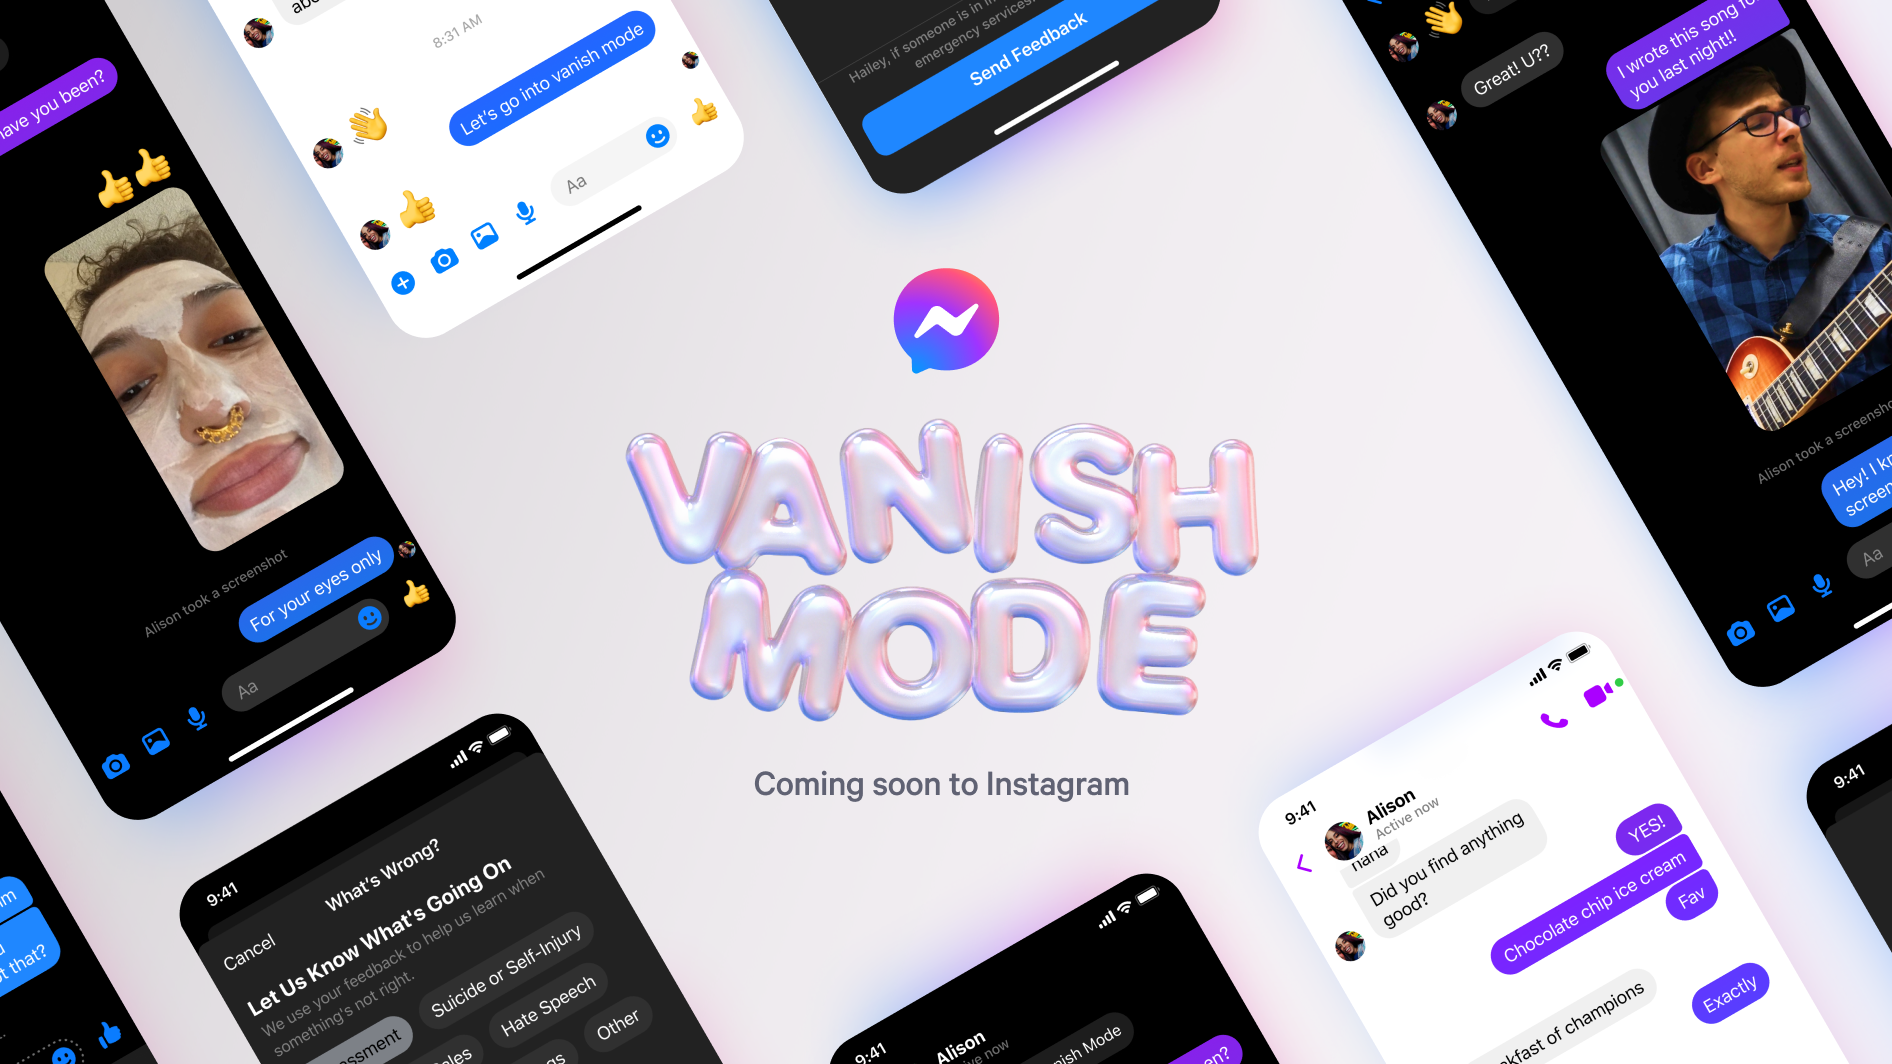 How to use Vanish Mode on Instagram